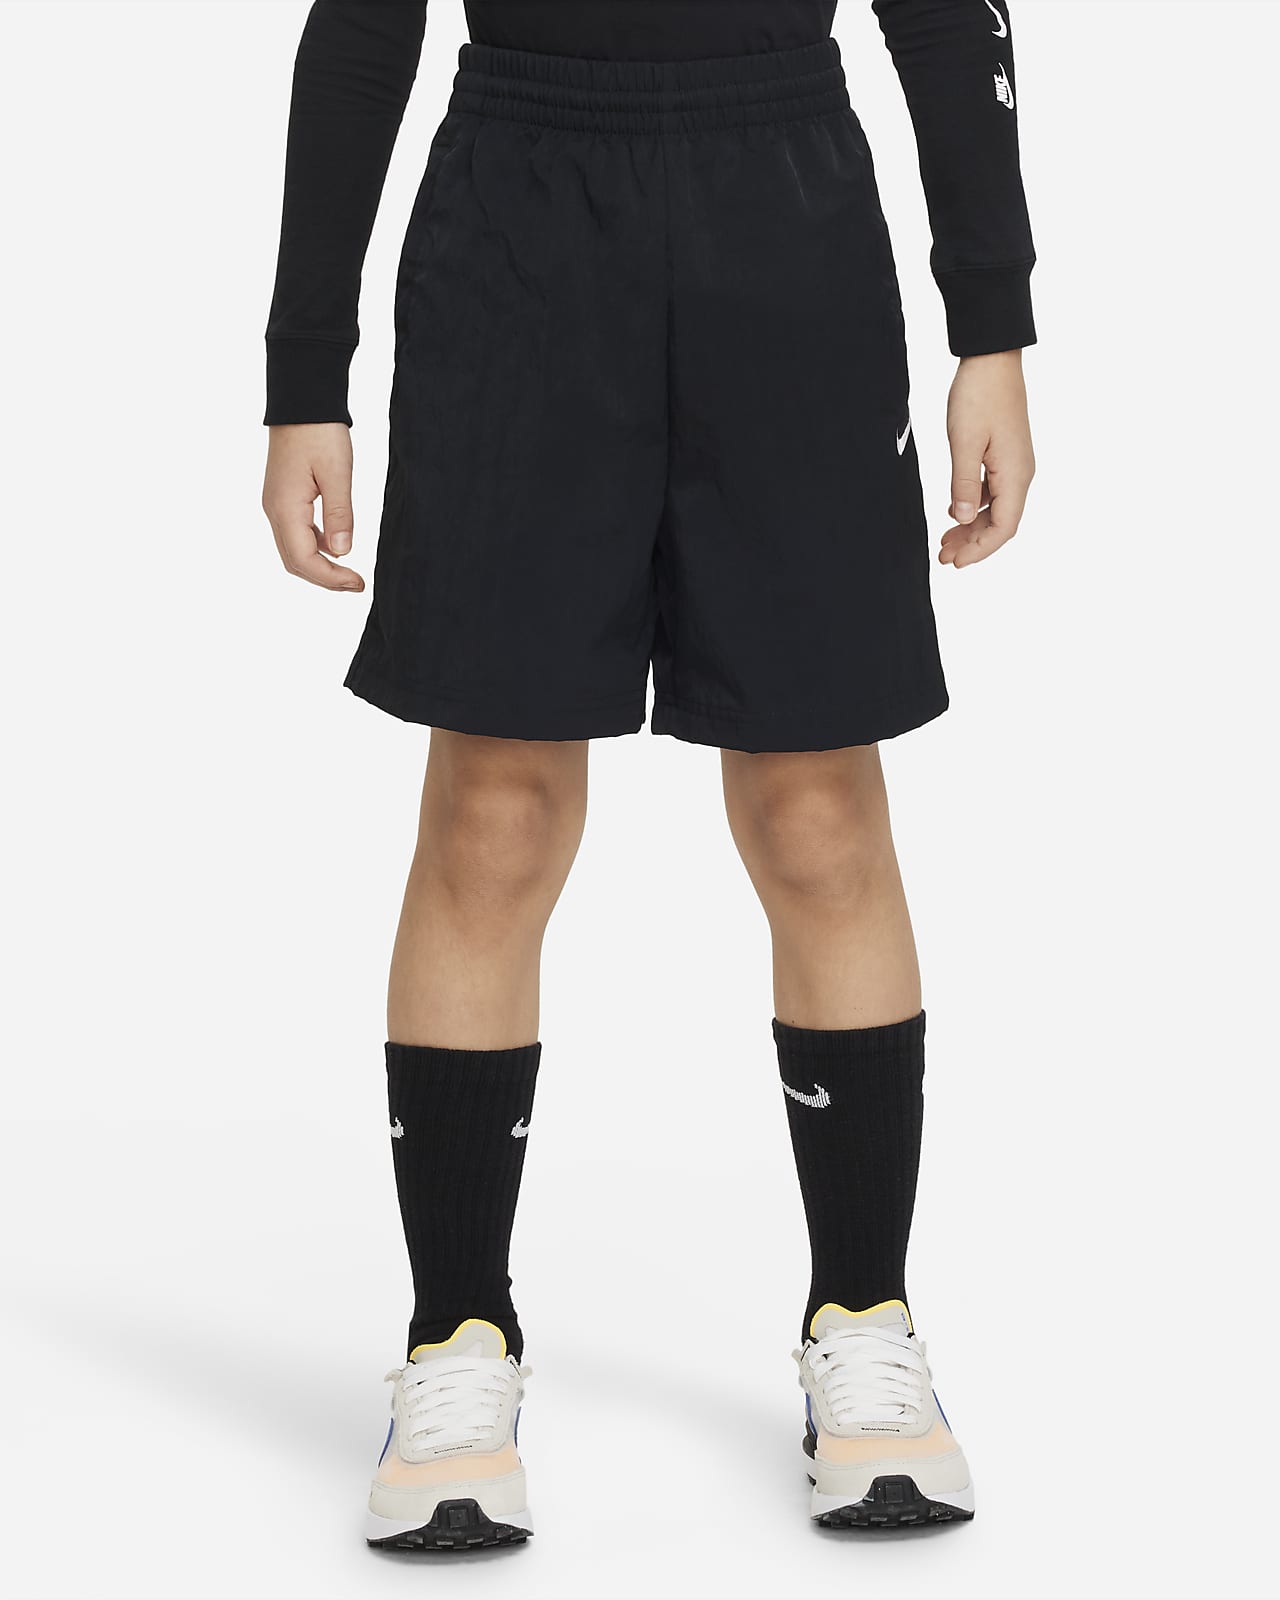 Nike Outdoor Play Big Kids' Woven Shorts